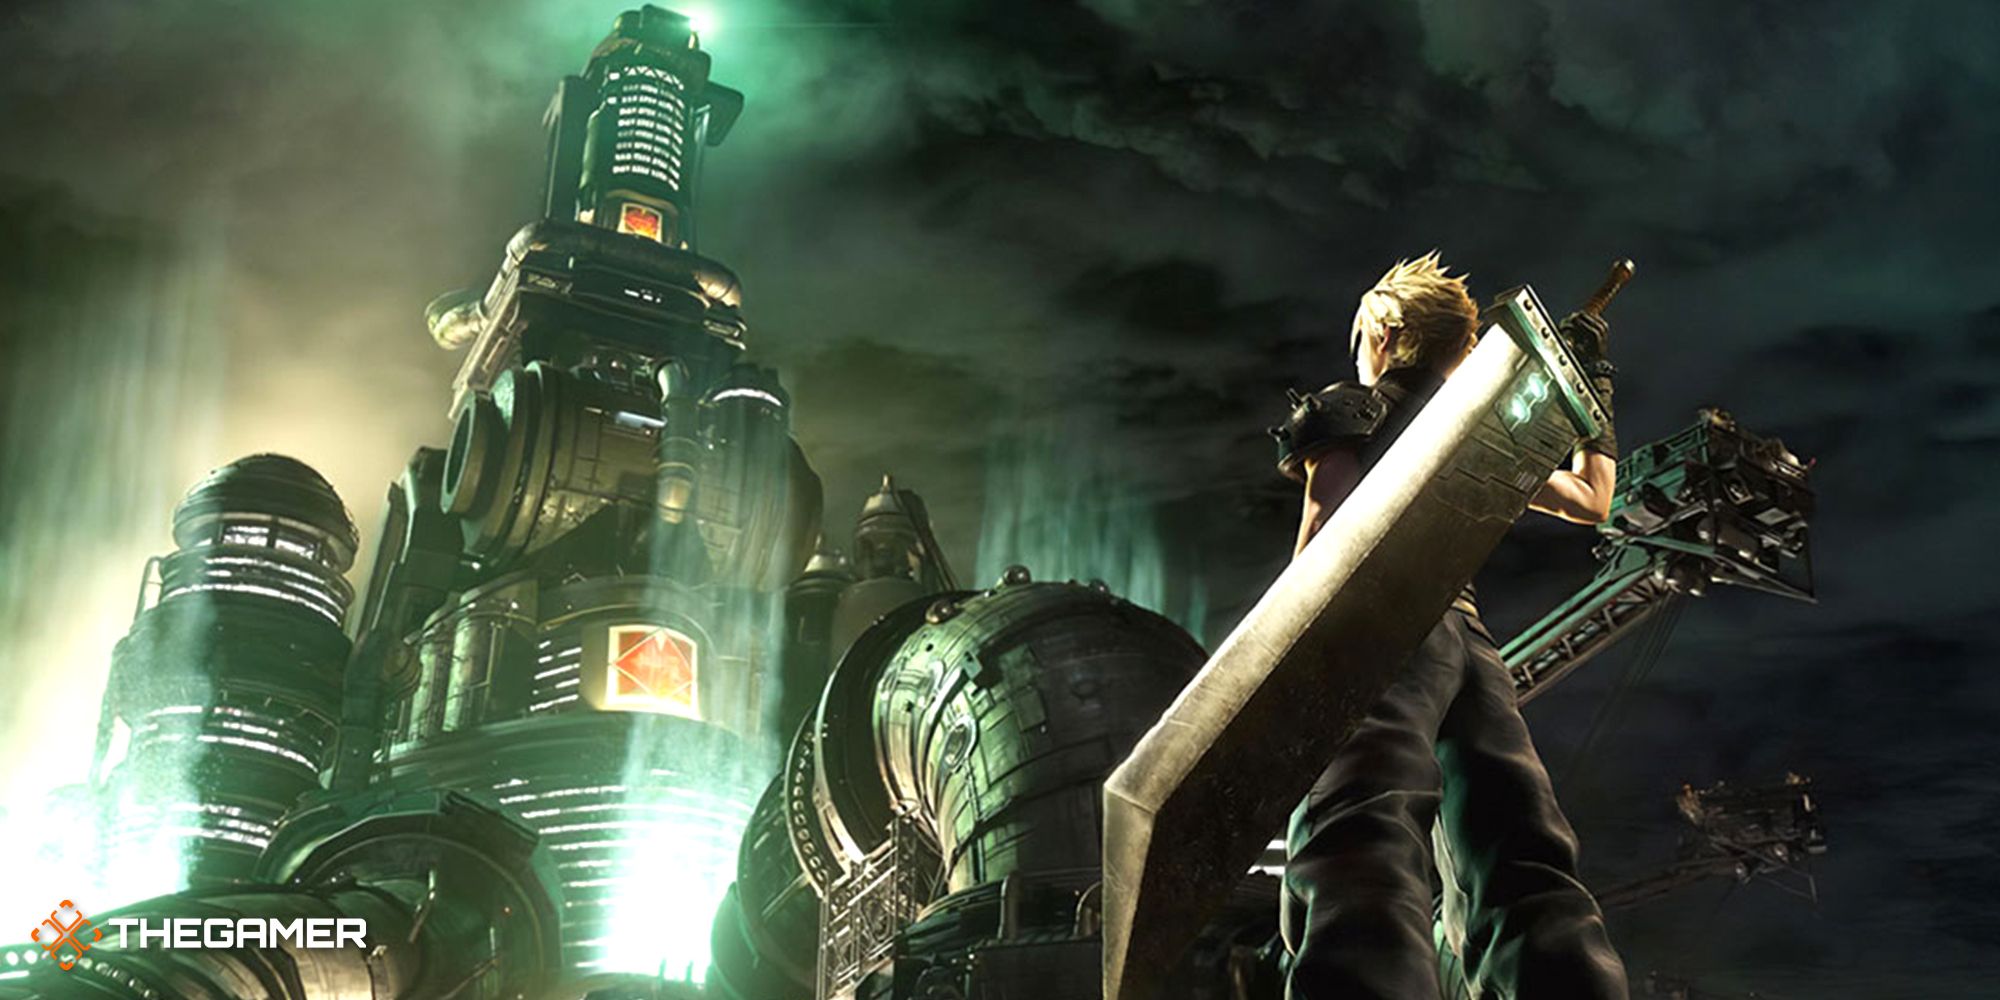 Final Fantasy 7 Remake' Review: More Straightforward Than Spectacular -  GAMINGbible